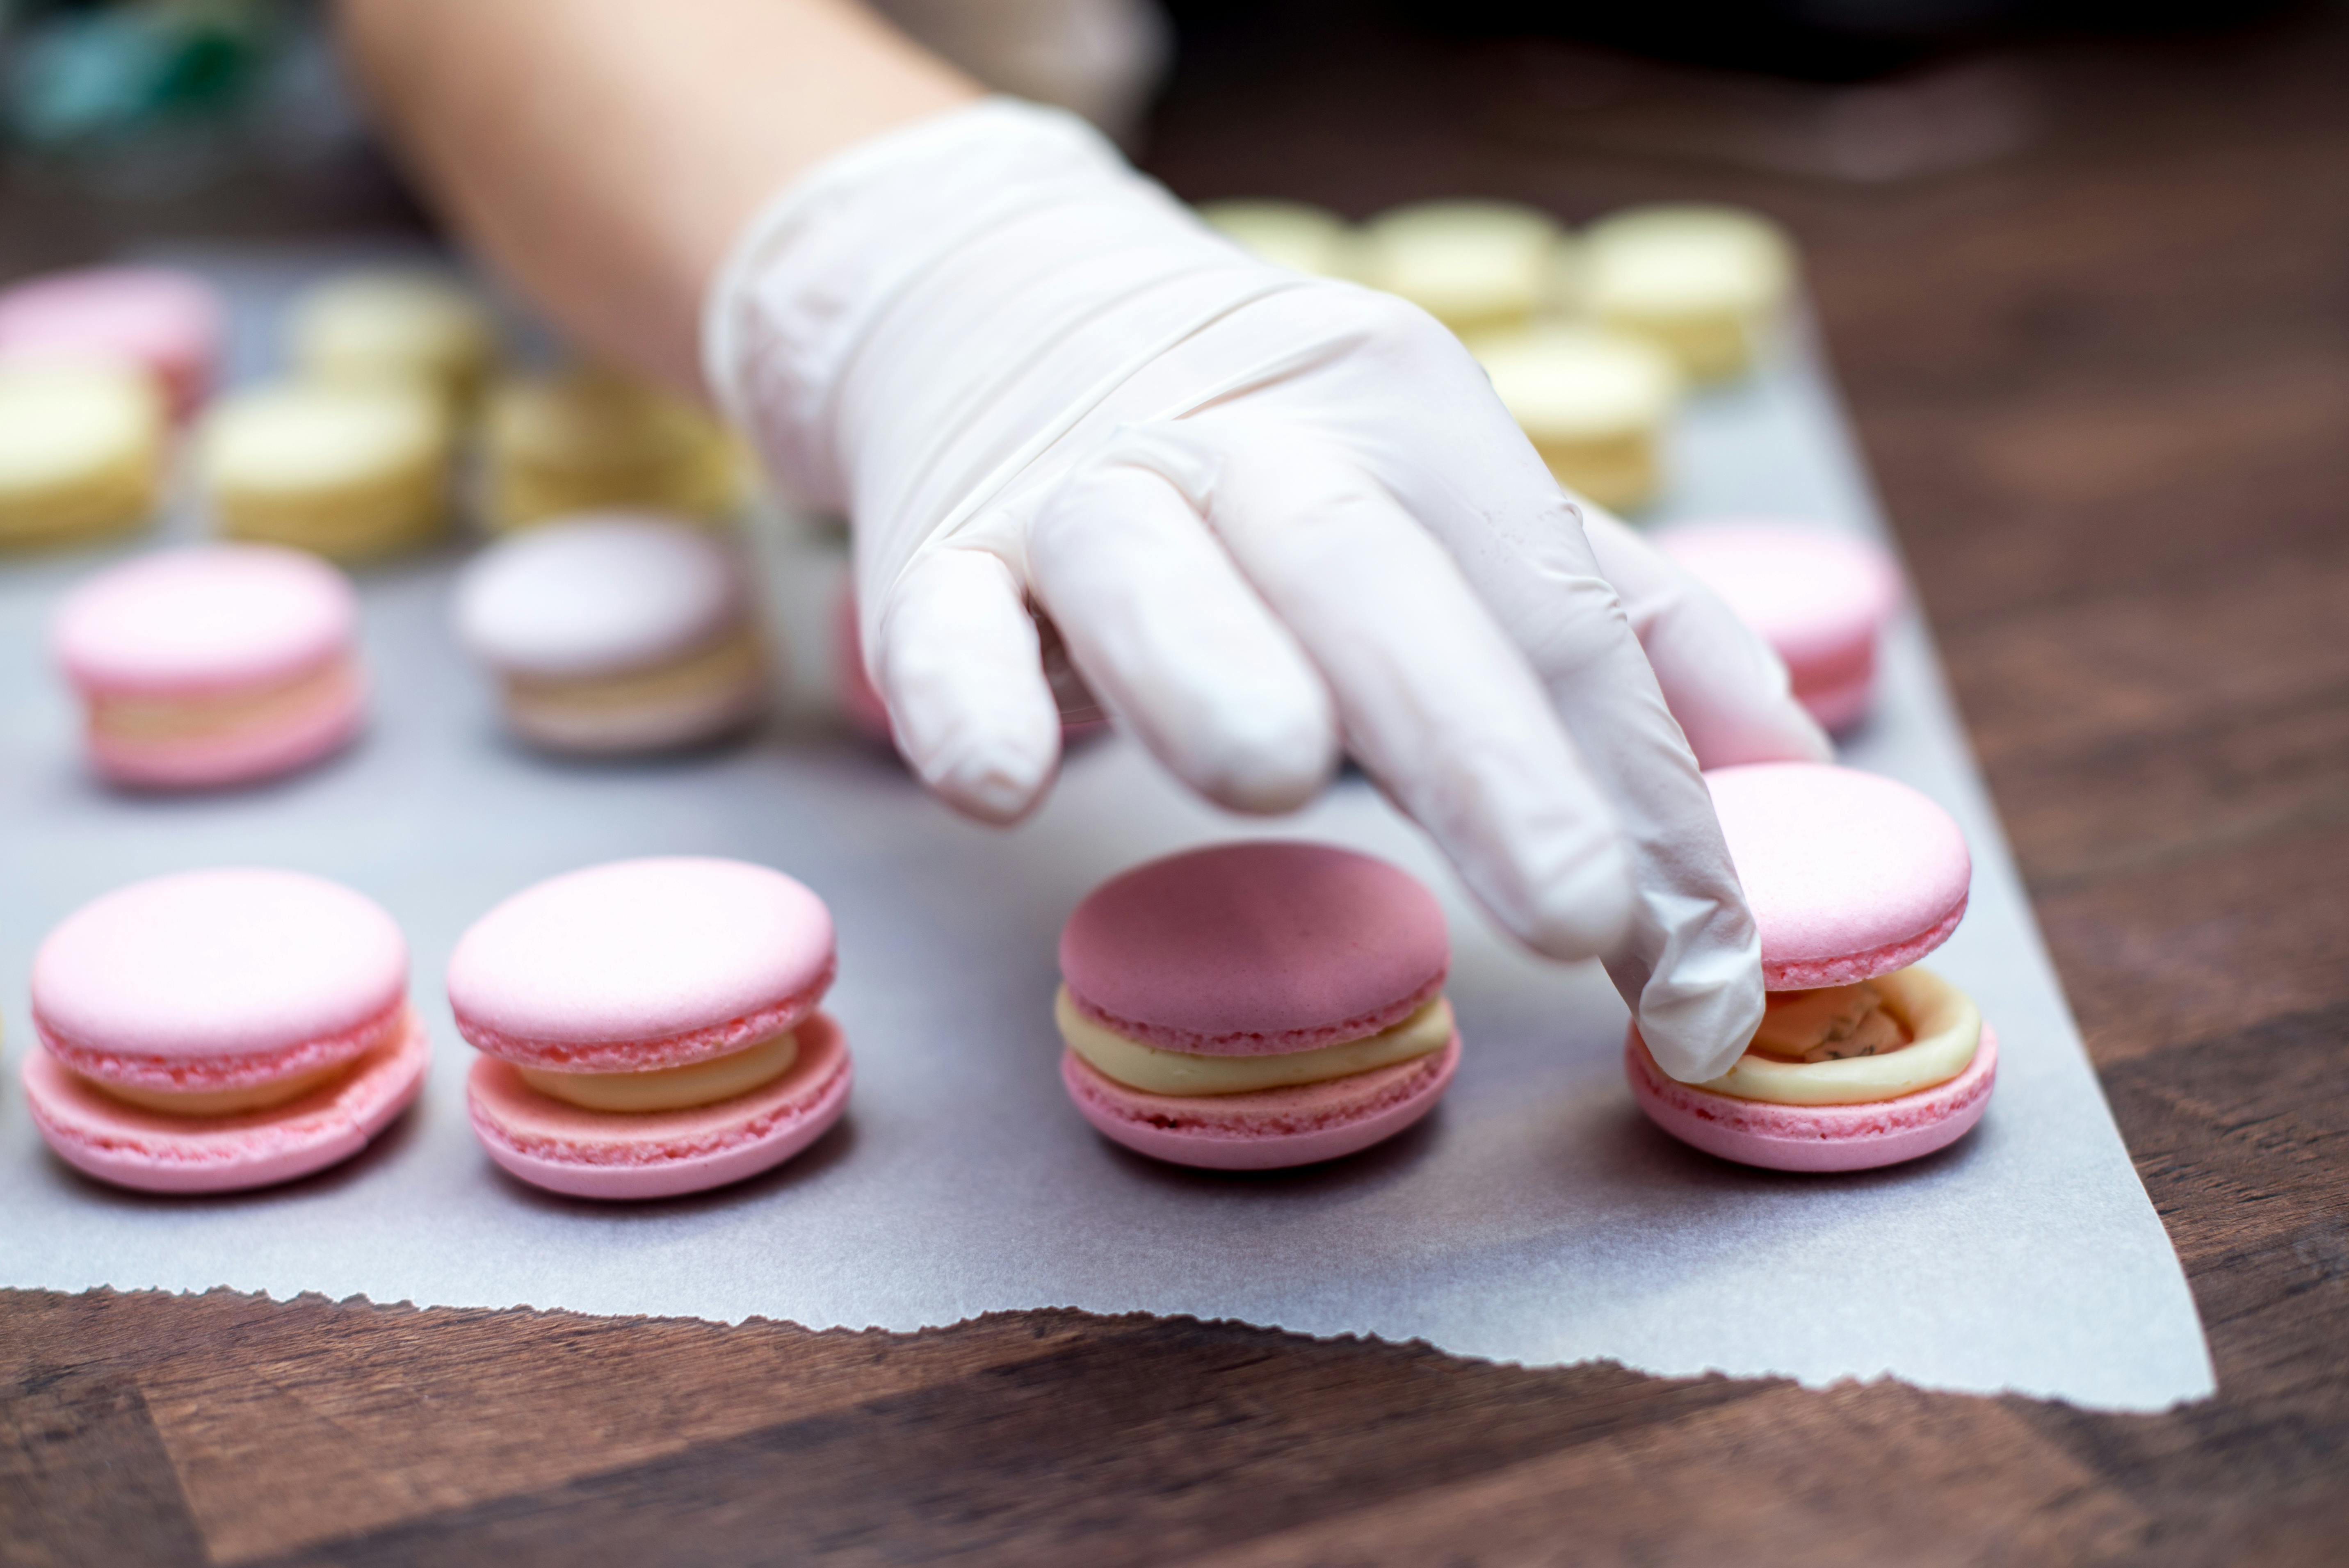 Macaron baking class with a Parisian chef